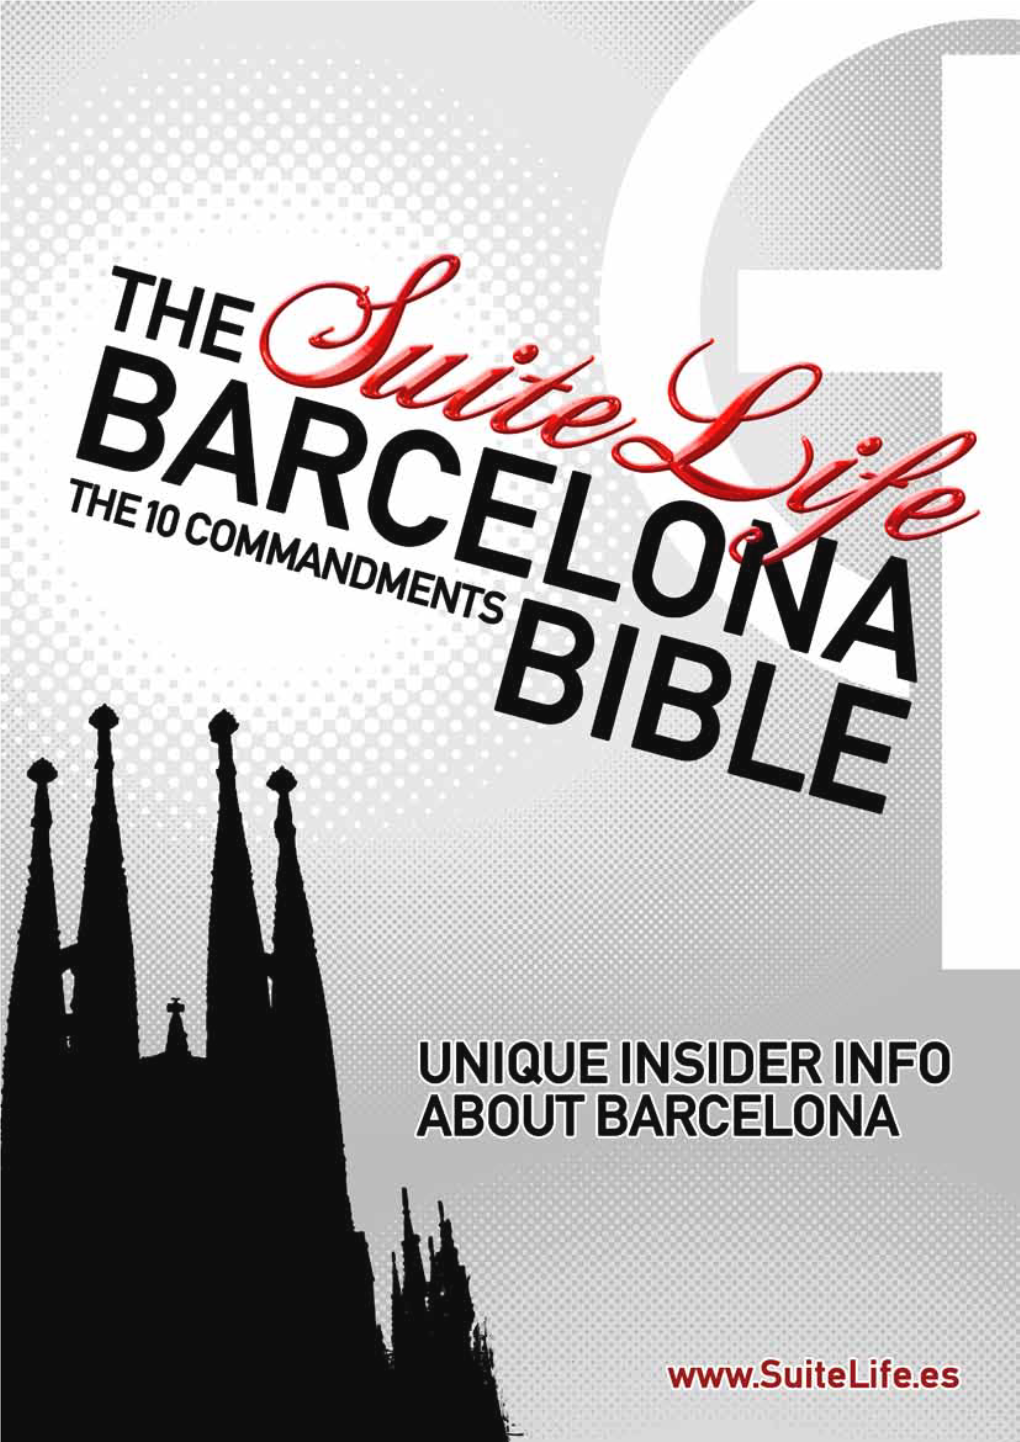 The Barcelona Bible: the 10 Commandments